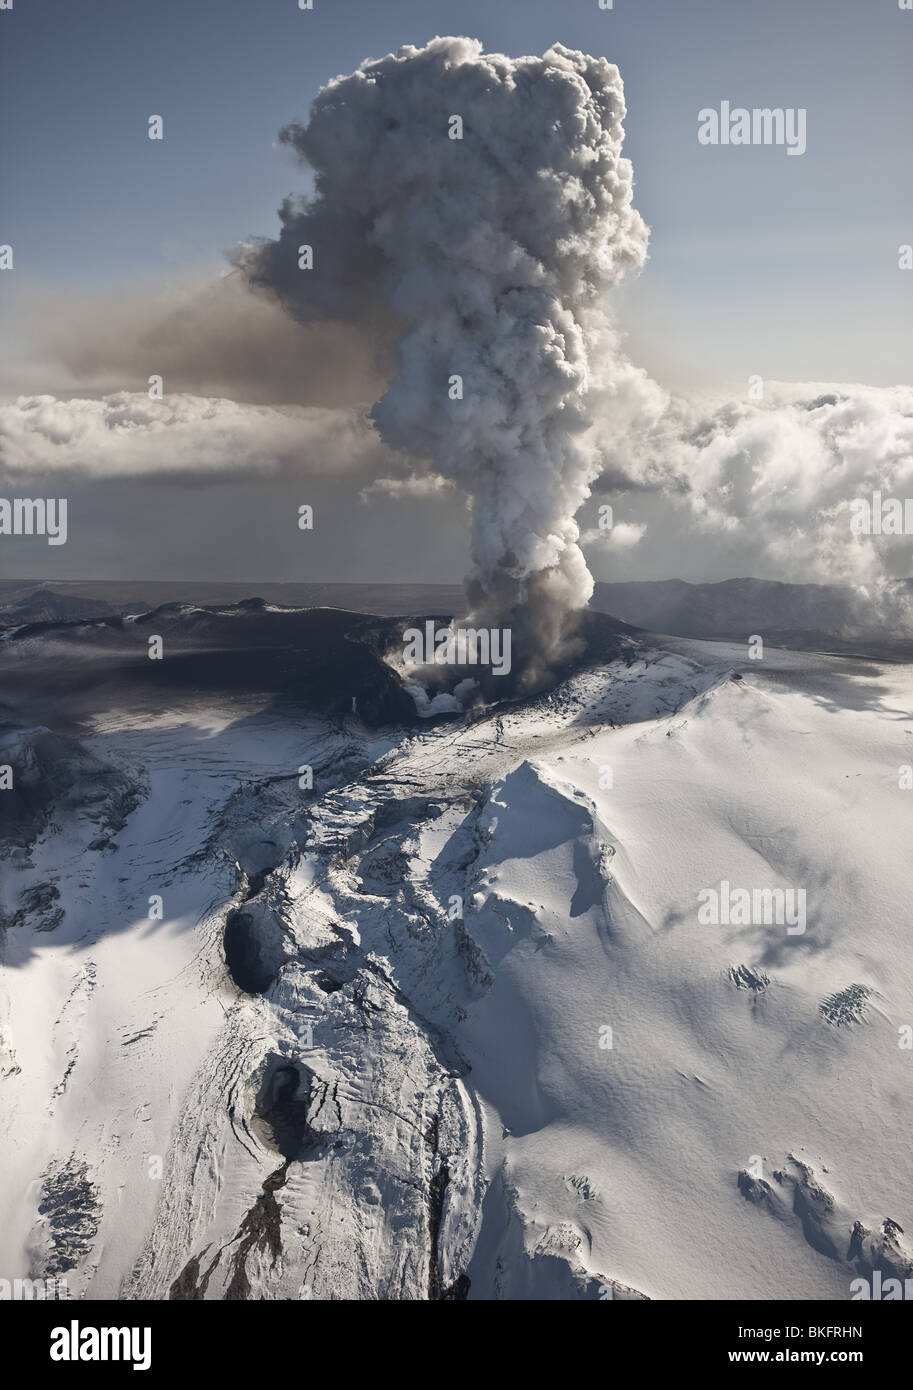 Volcanic Ash Cloud from Eyjafjallajokull Volcano Eruption, Iceland. Stock Photo